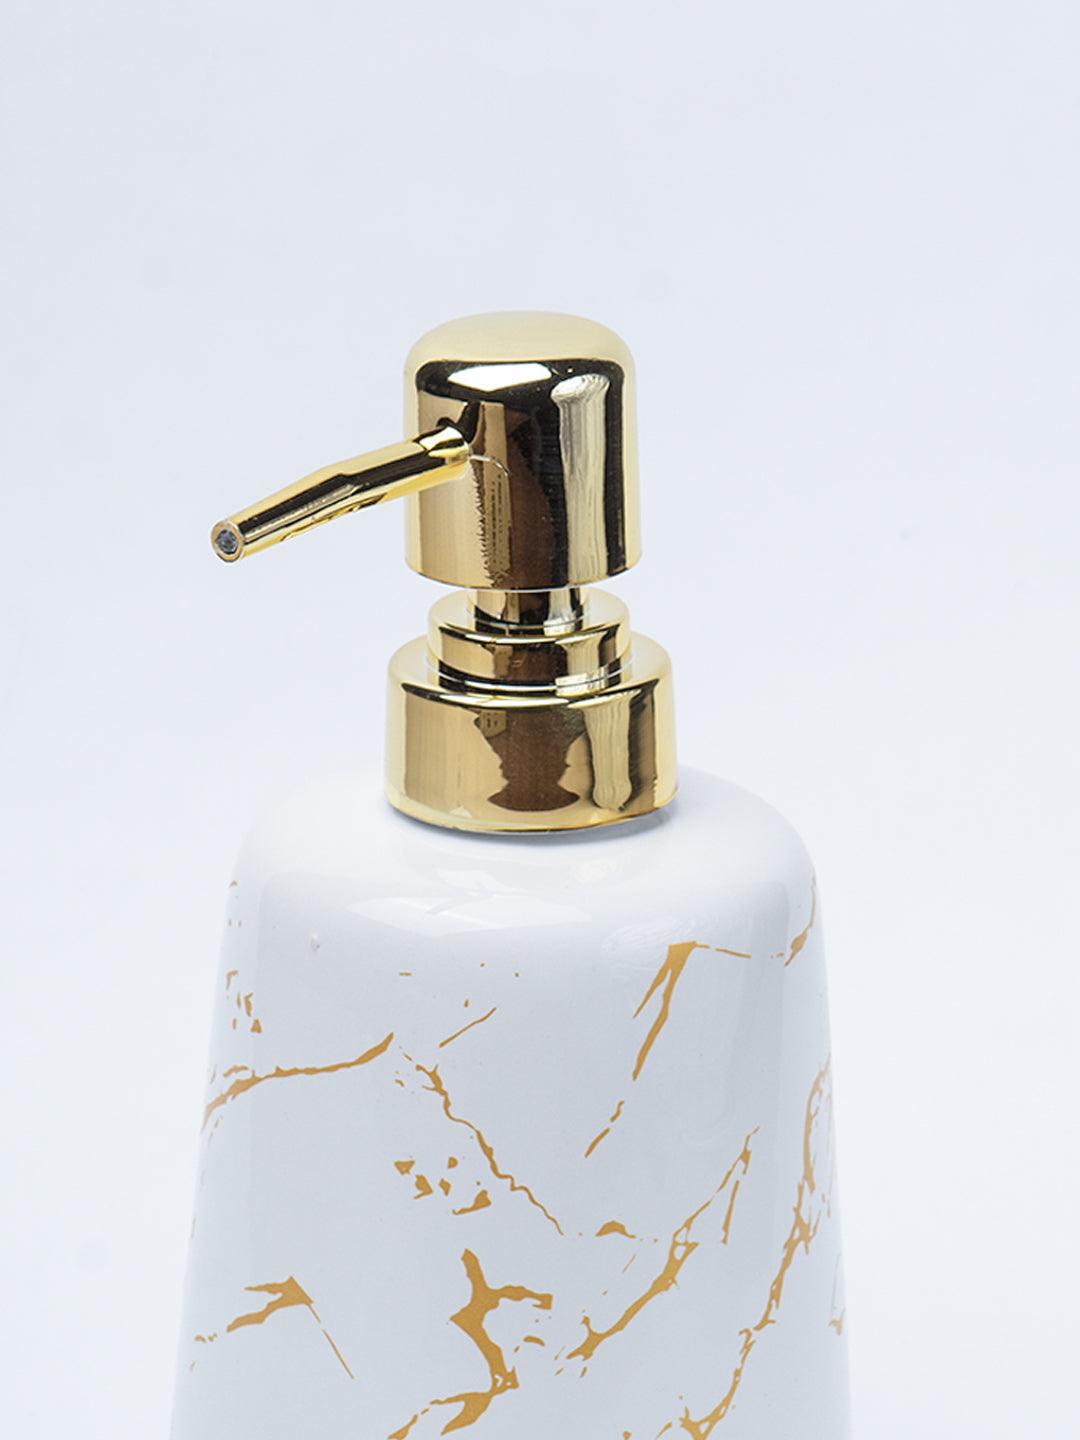 Off White Ceramic Liquid Soap Dispenser - Stone Finish, Bath Accessories - 4